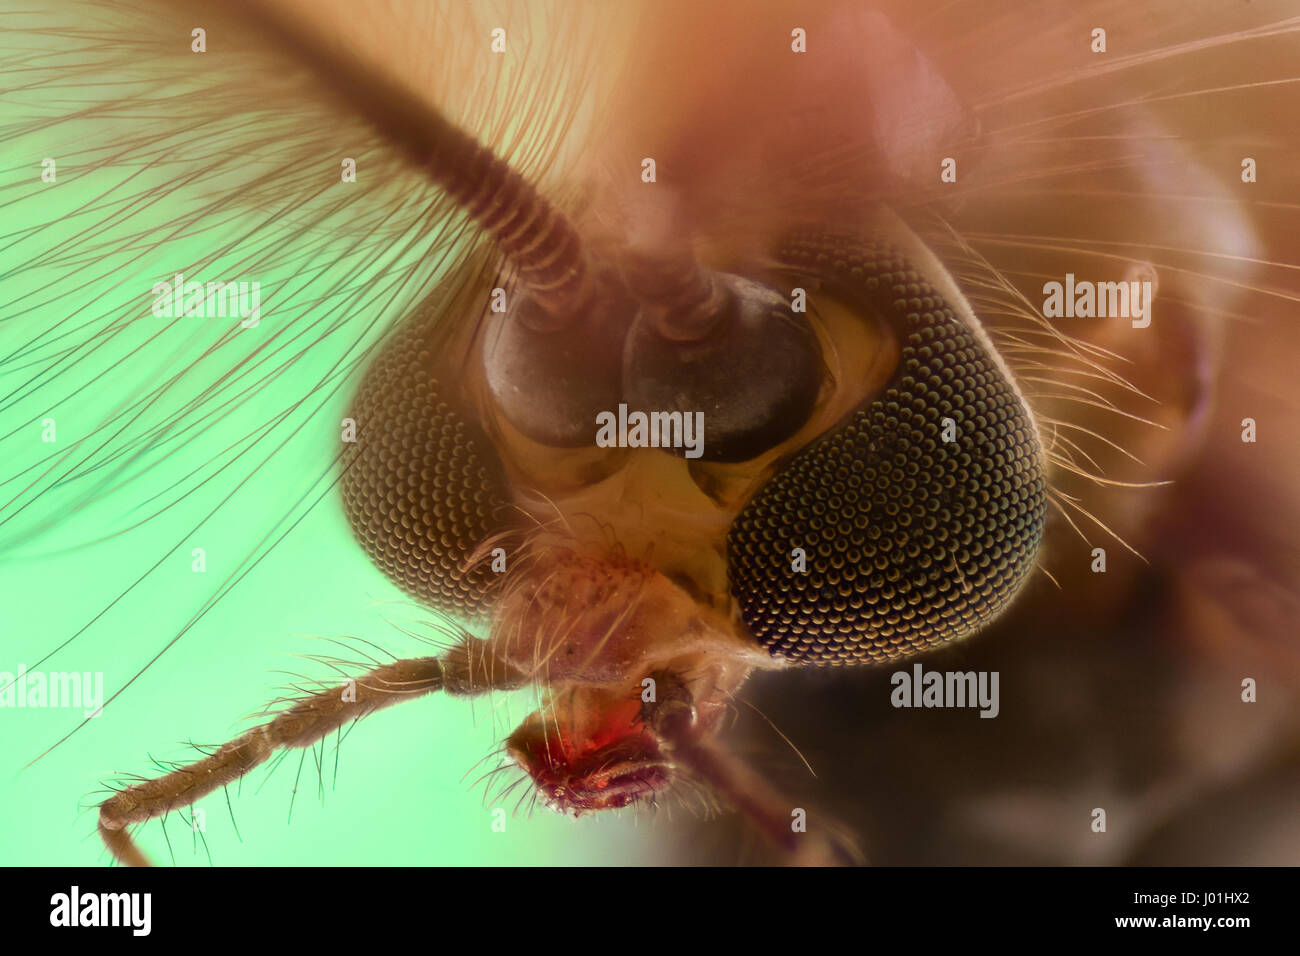 Extreme ingrandimento - Testa di zanzara, Chironomus, vista frontale Foto Stock